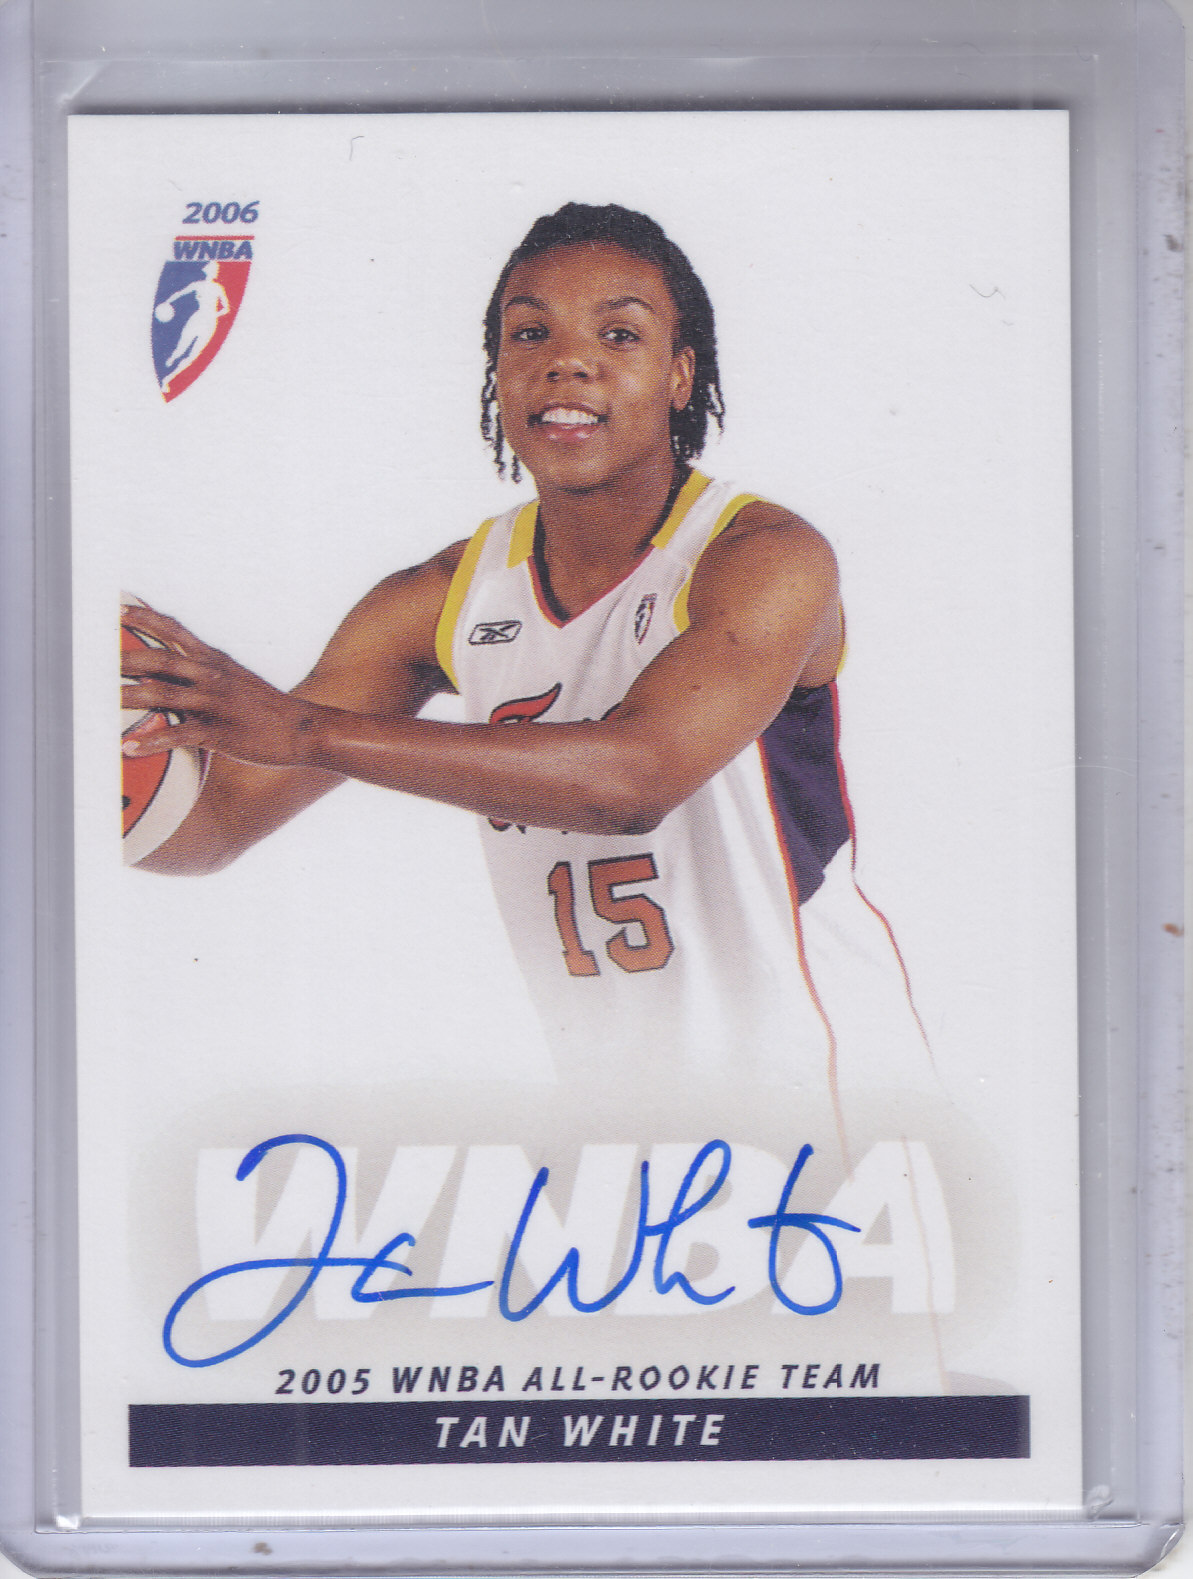 2006 WNBA Autographs #6 Tan White